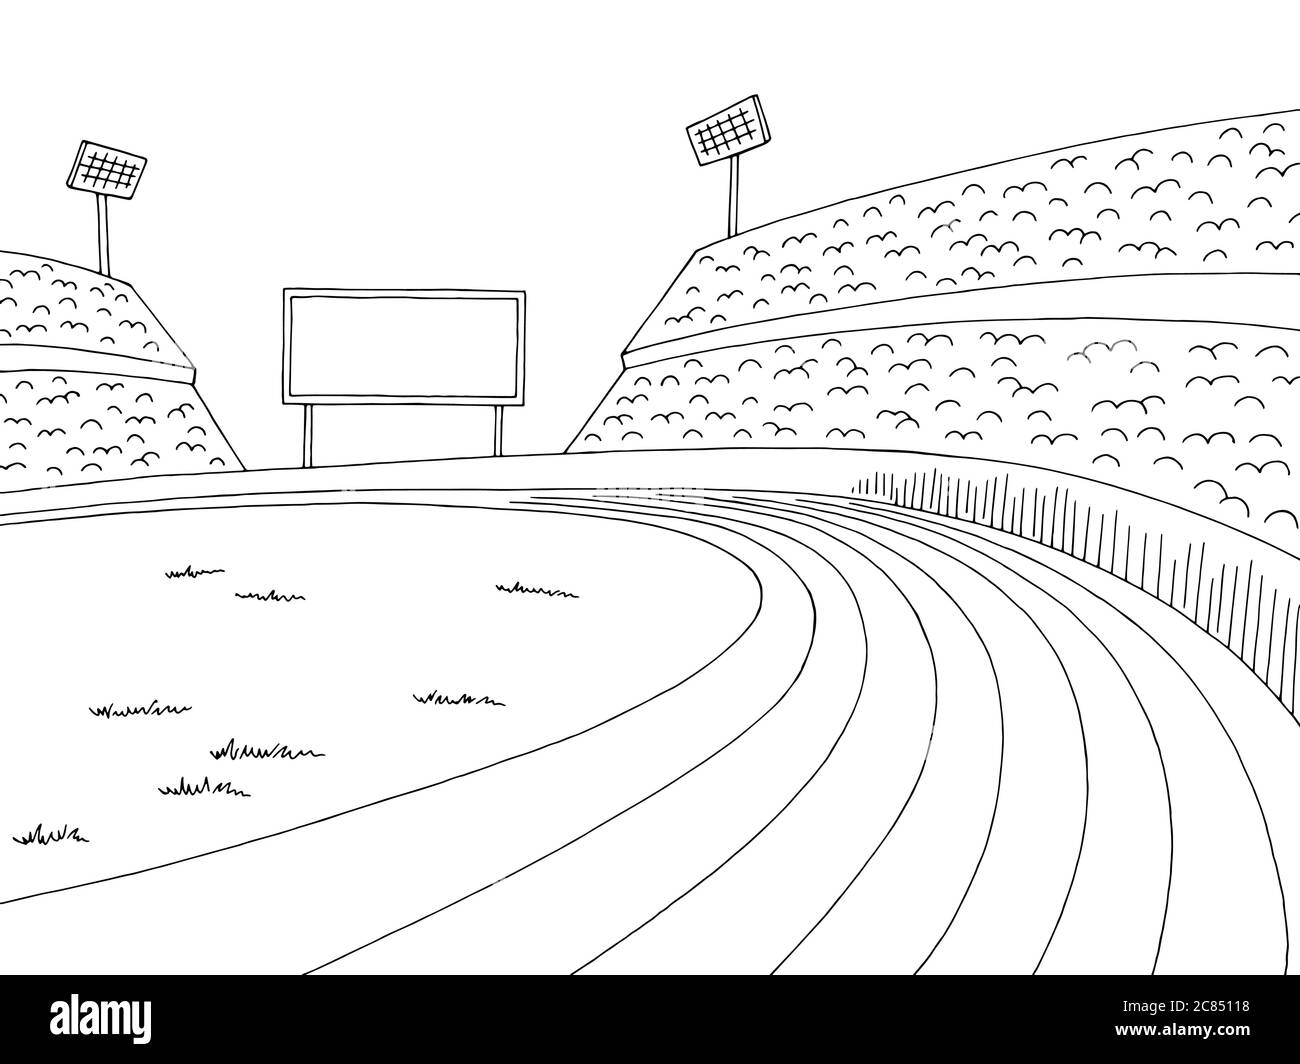 Stadion Laufstrecke Sport Grafik schwarz weiß Skizze Illustration Vektor Stock Vektor